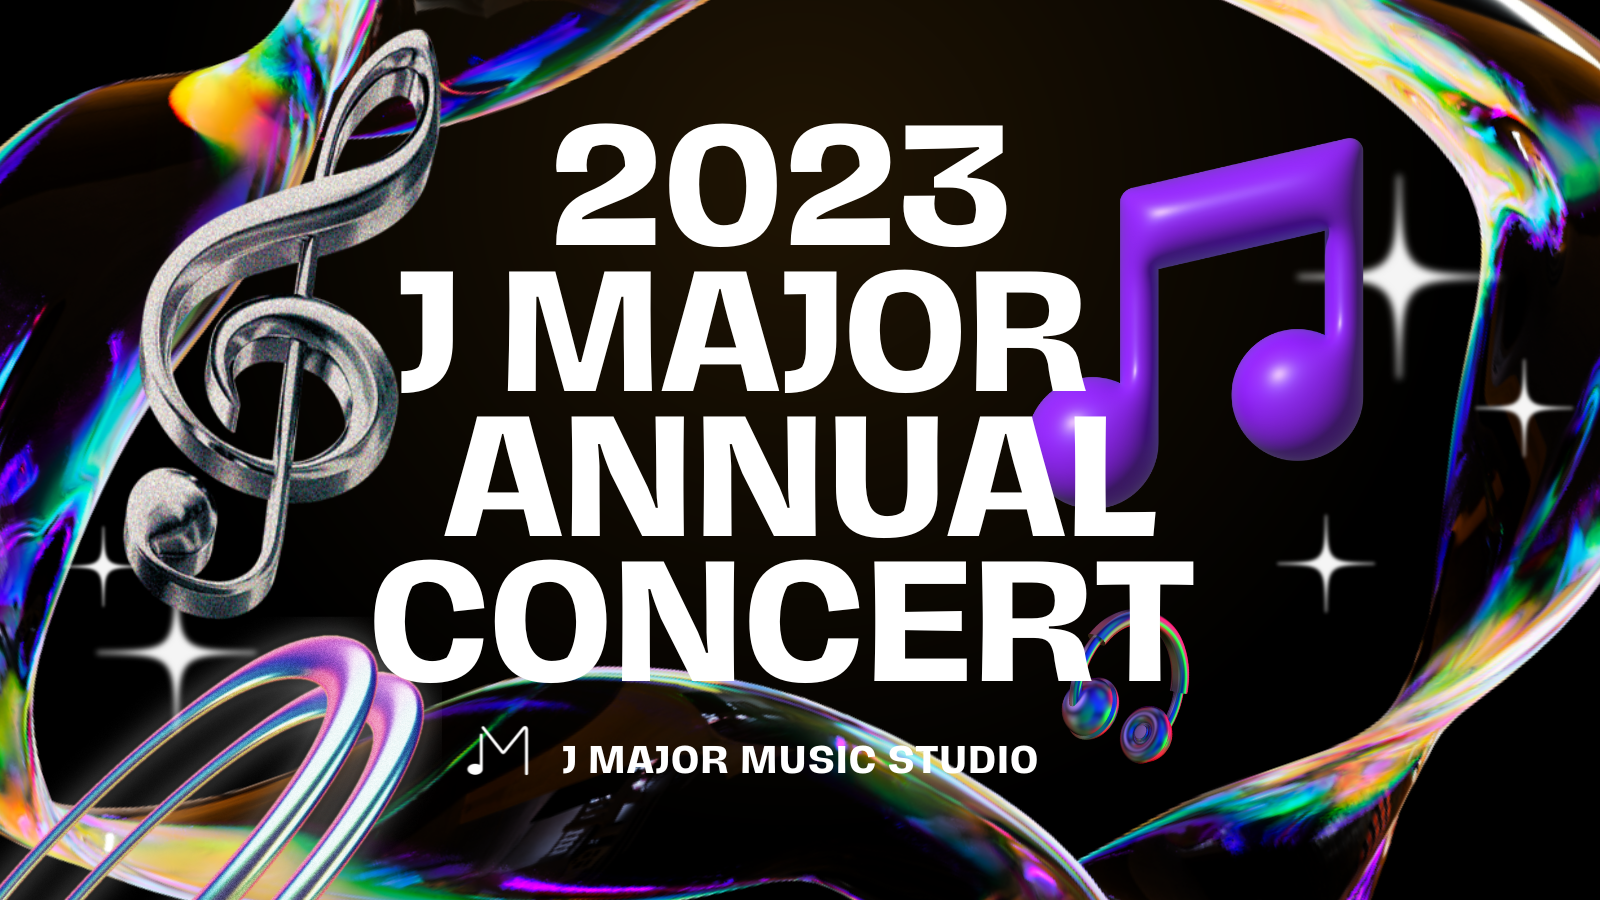 J Major Annual Concert